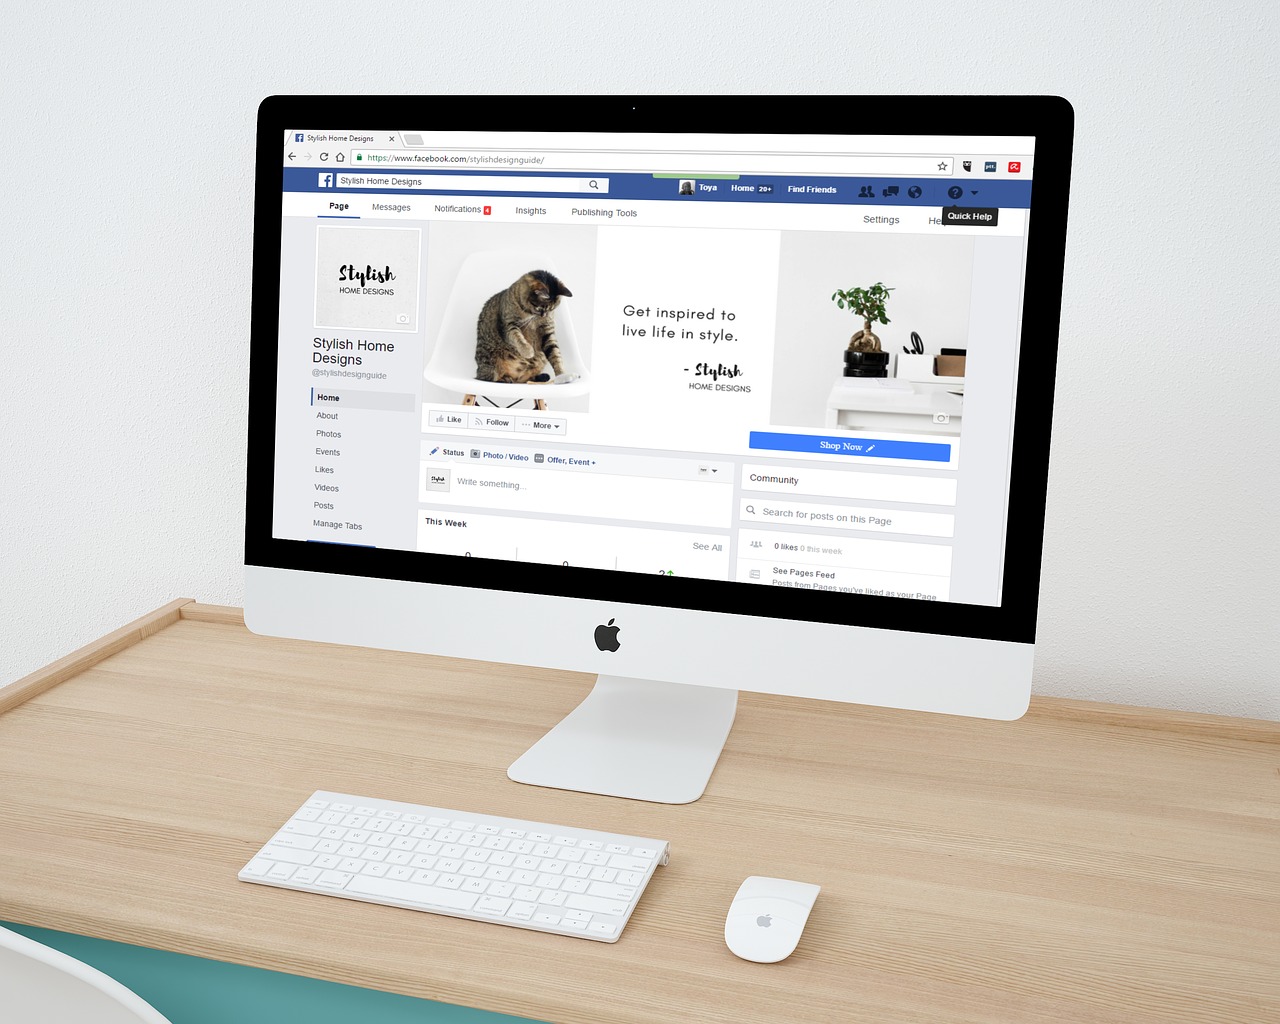 Slika prikazuje računalo na kojem je prikazan Facebook profil.